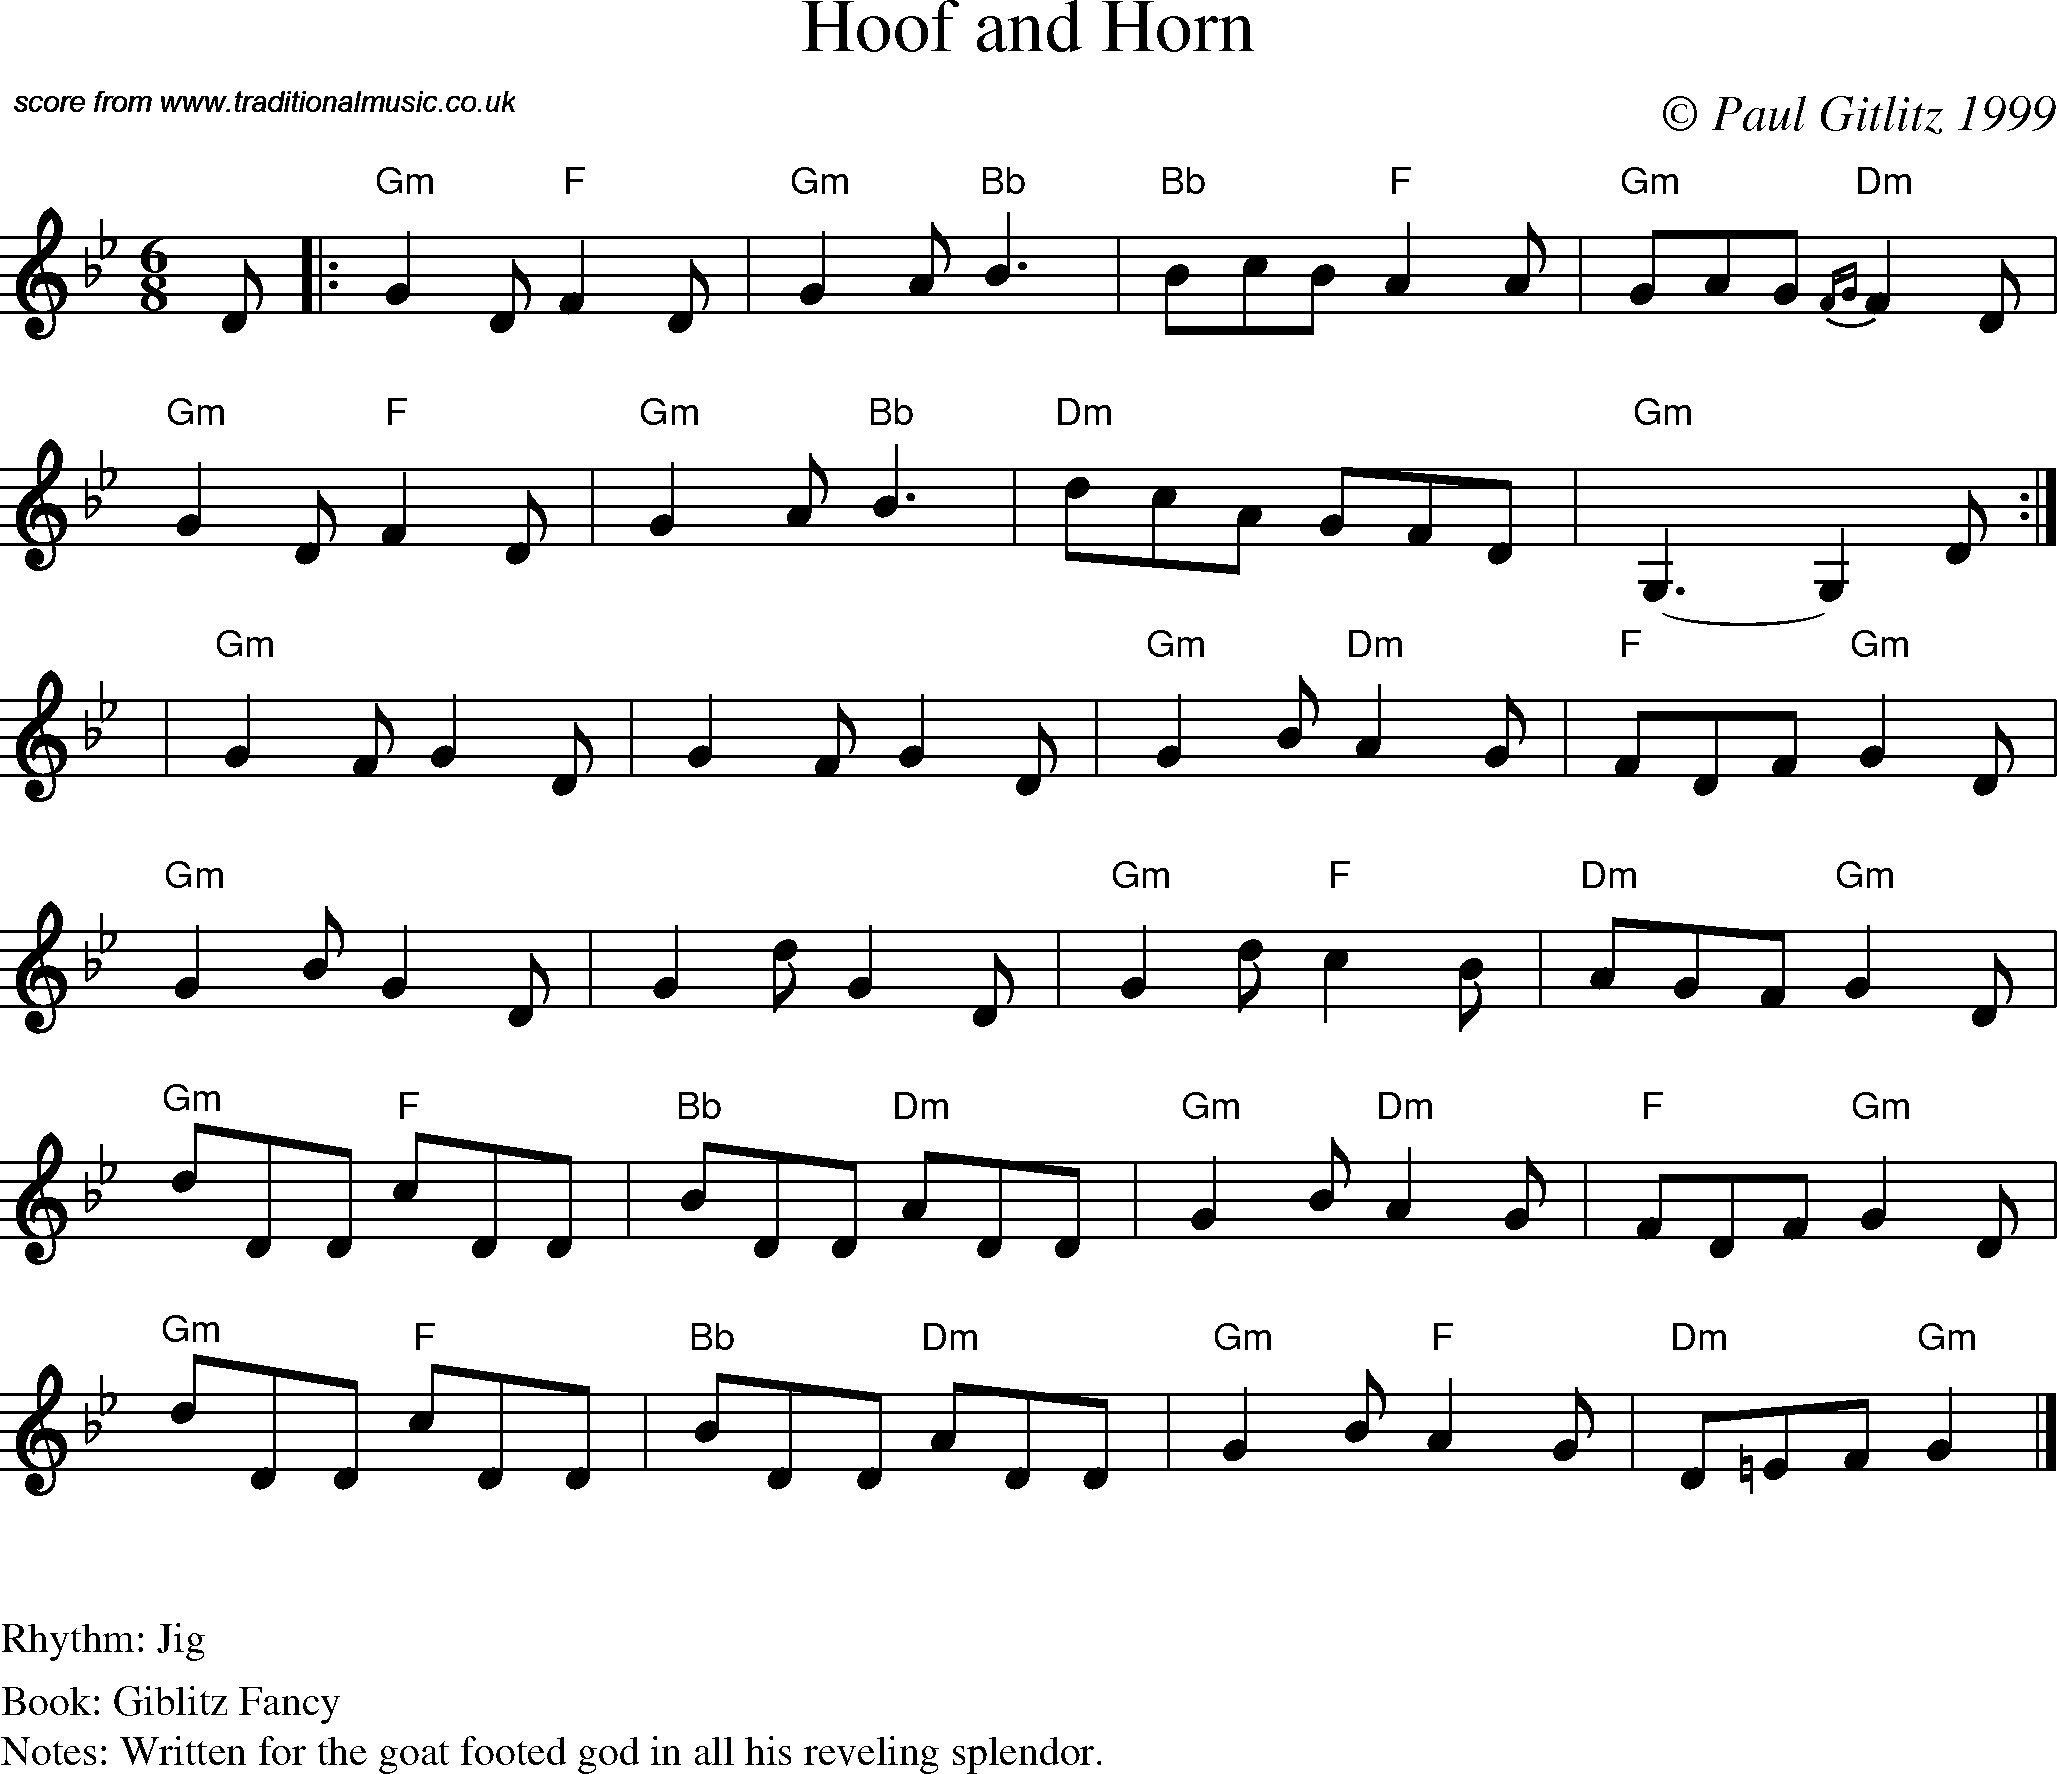 Sheet Music Score for Jig - Hoof and Horn